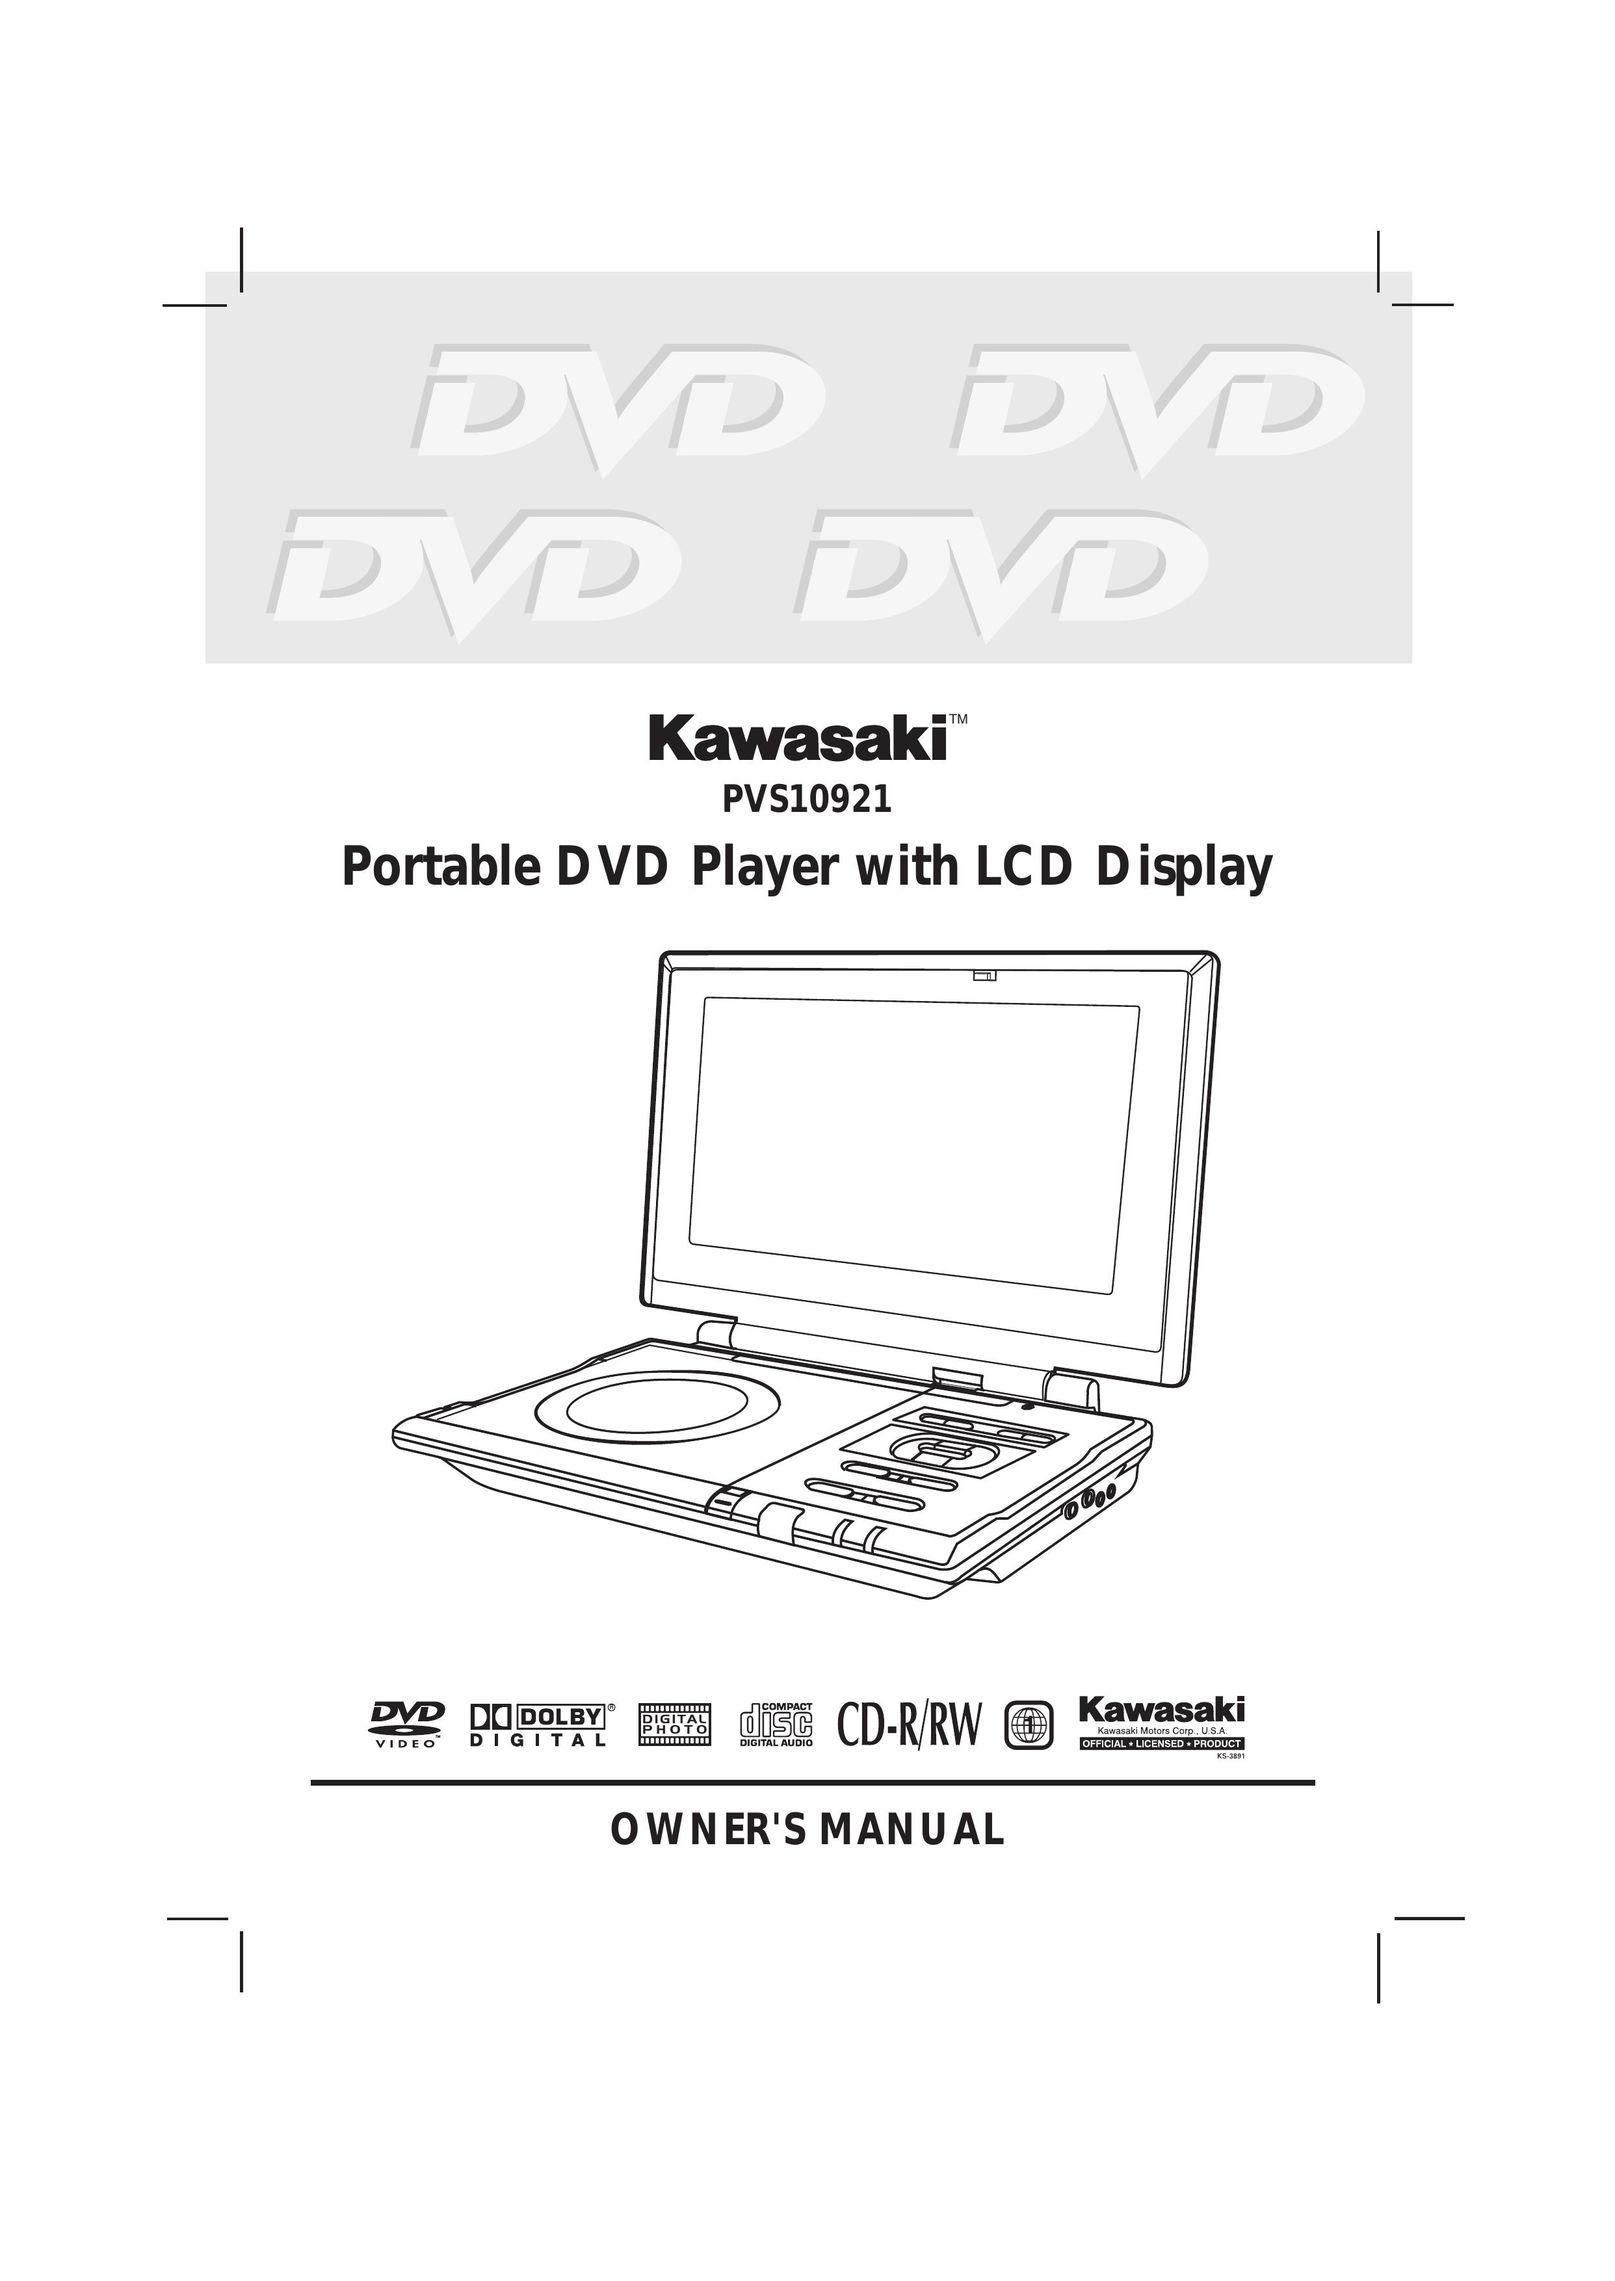 Kawasaki PVS10921 Portable DVD Player User Manual